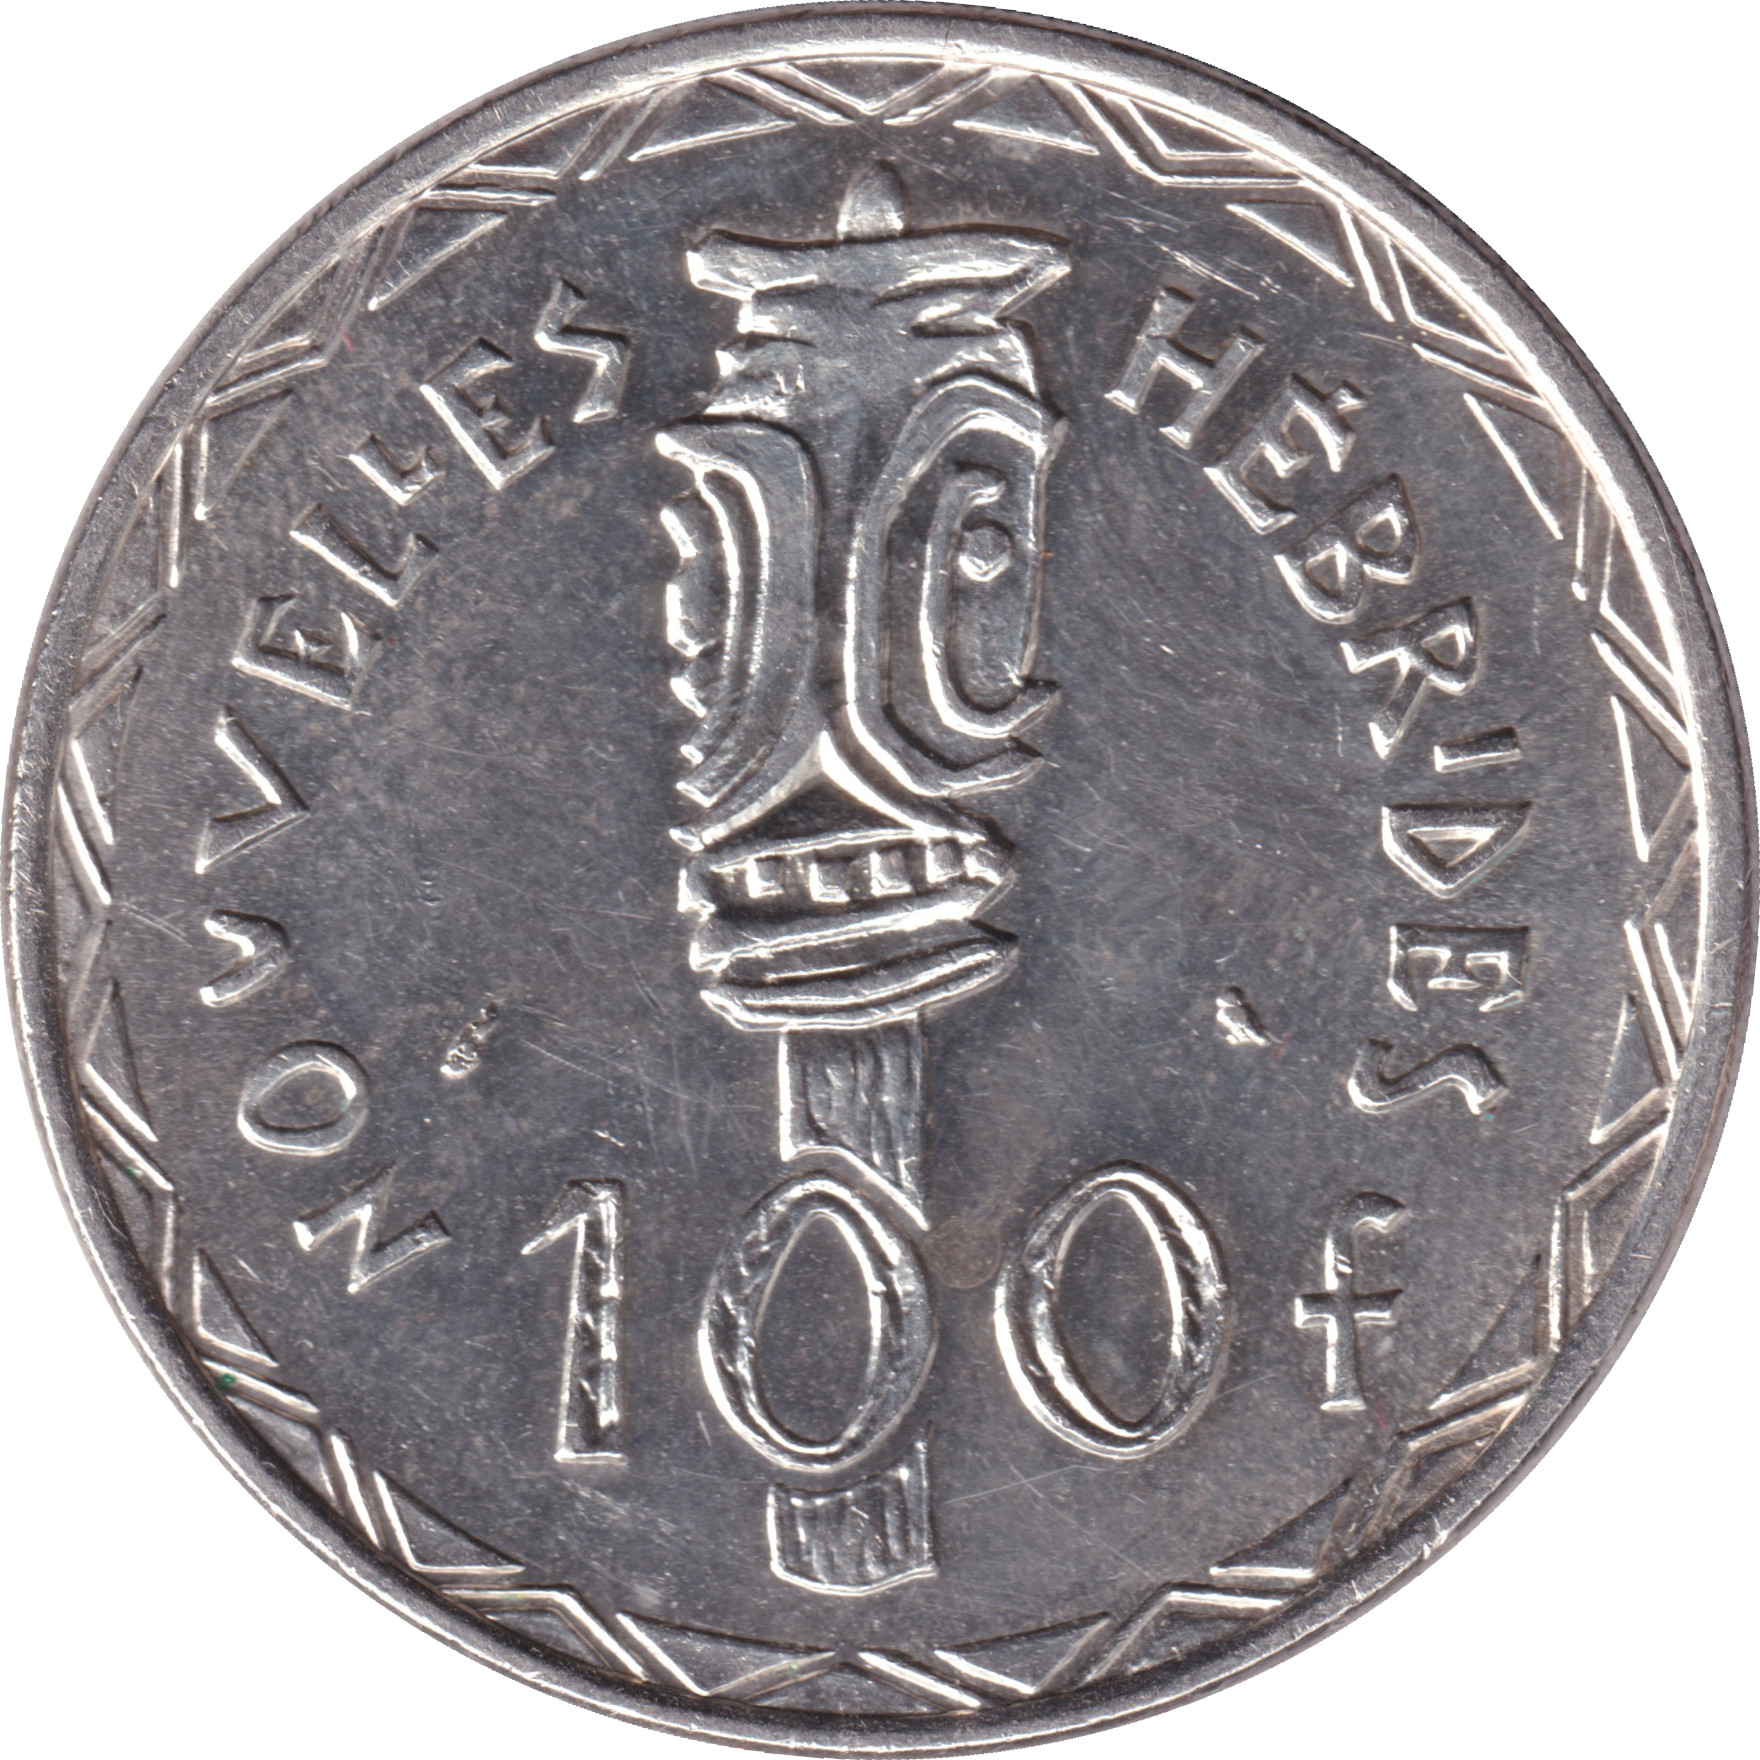 100 francs - Totem